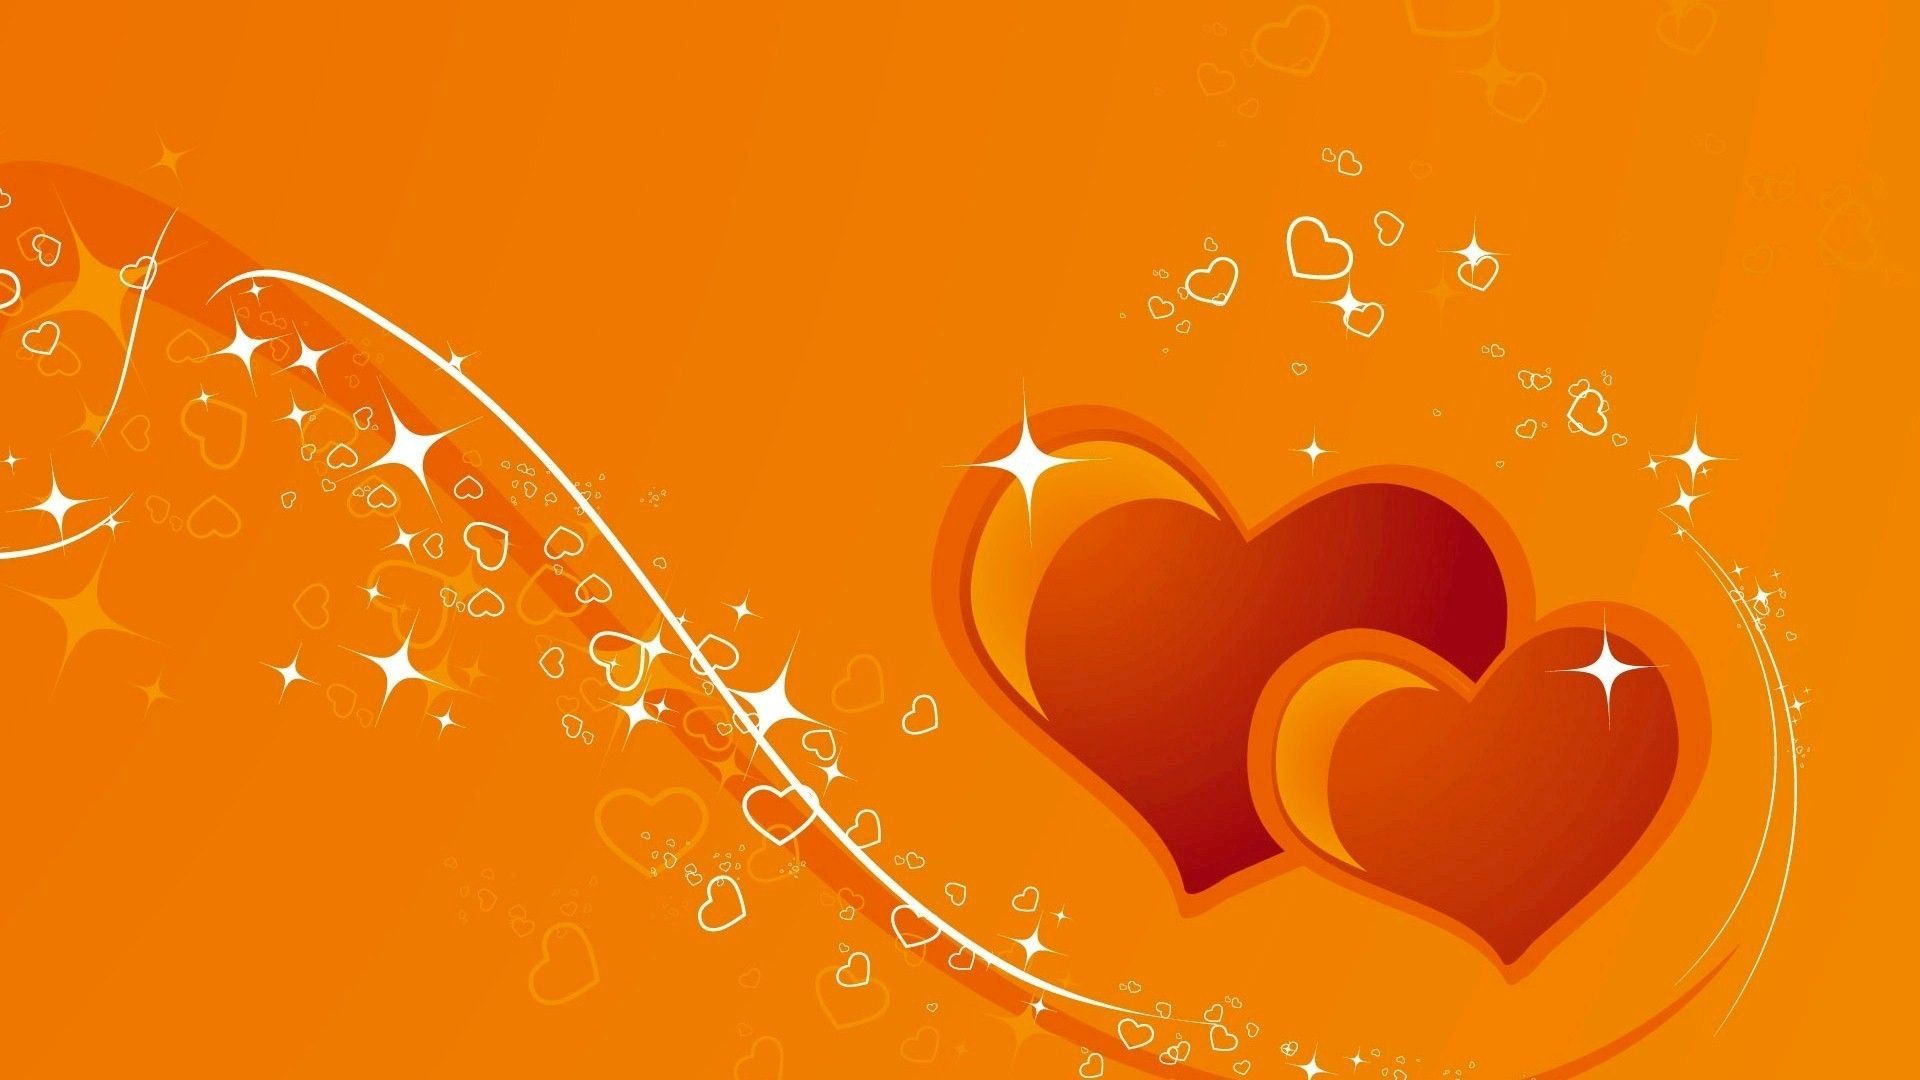 Love Image HD Wallpaper 3503. Beautiful Two Orange Heart. Heart Wallpaper Hd, Heart Wallpaper, Love Wallpaper